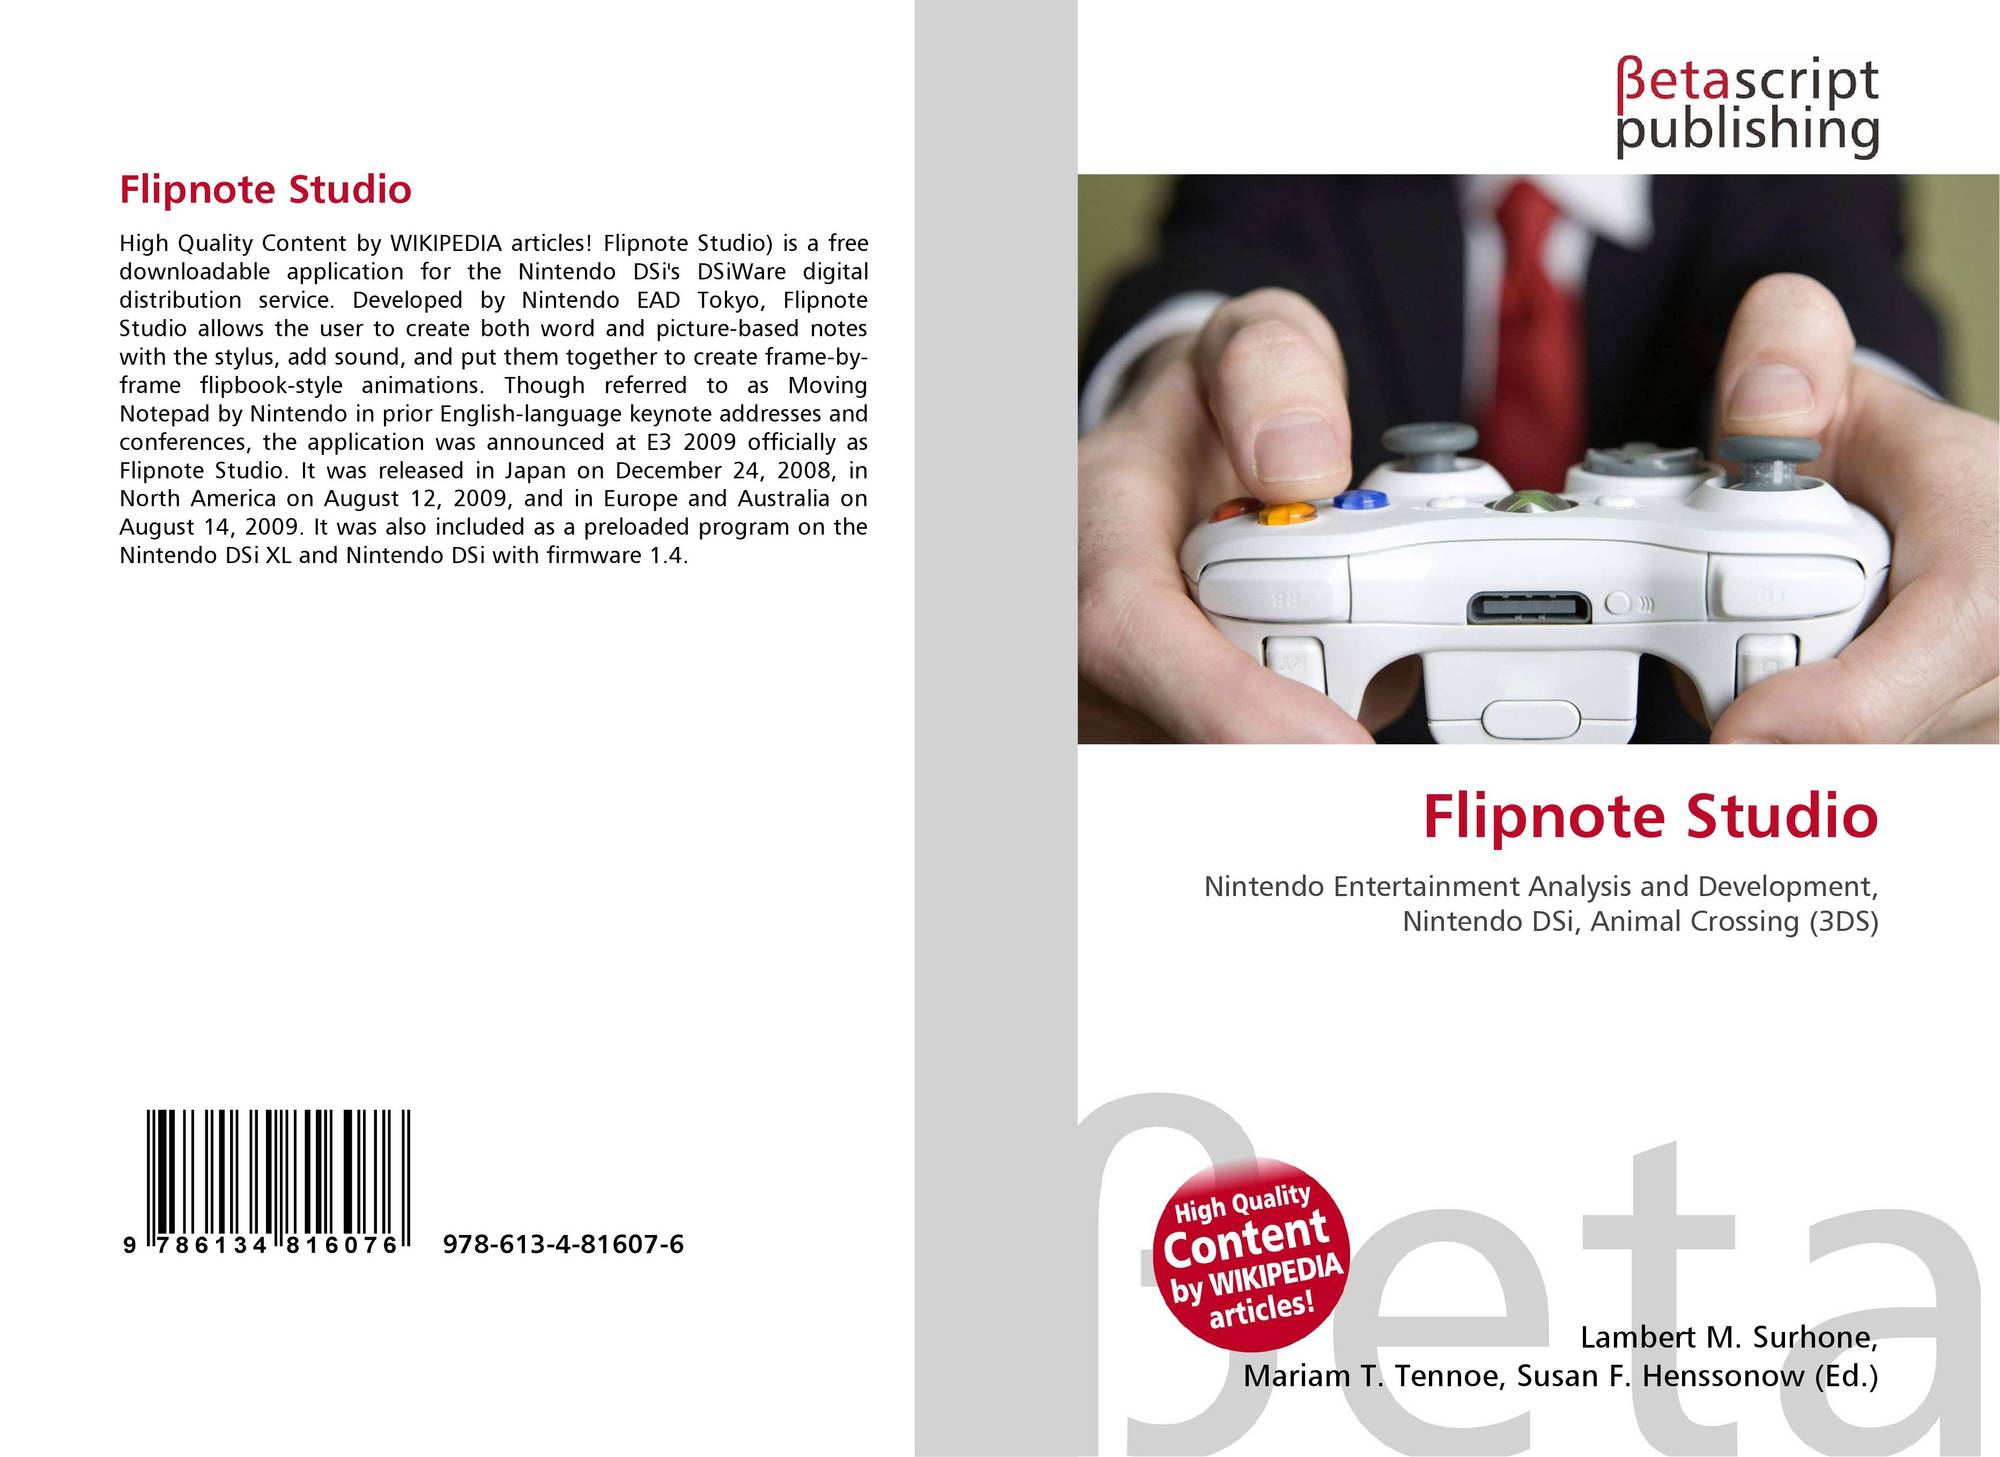 online flipnote studio